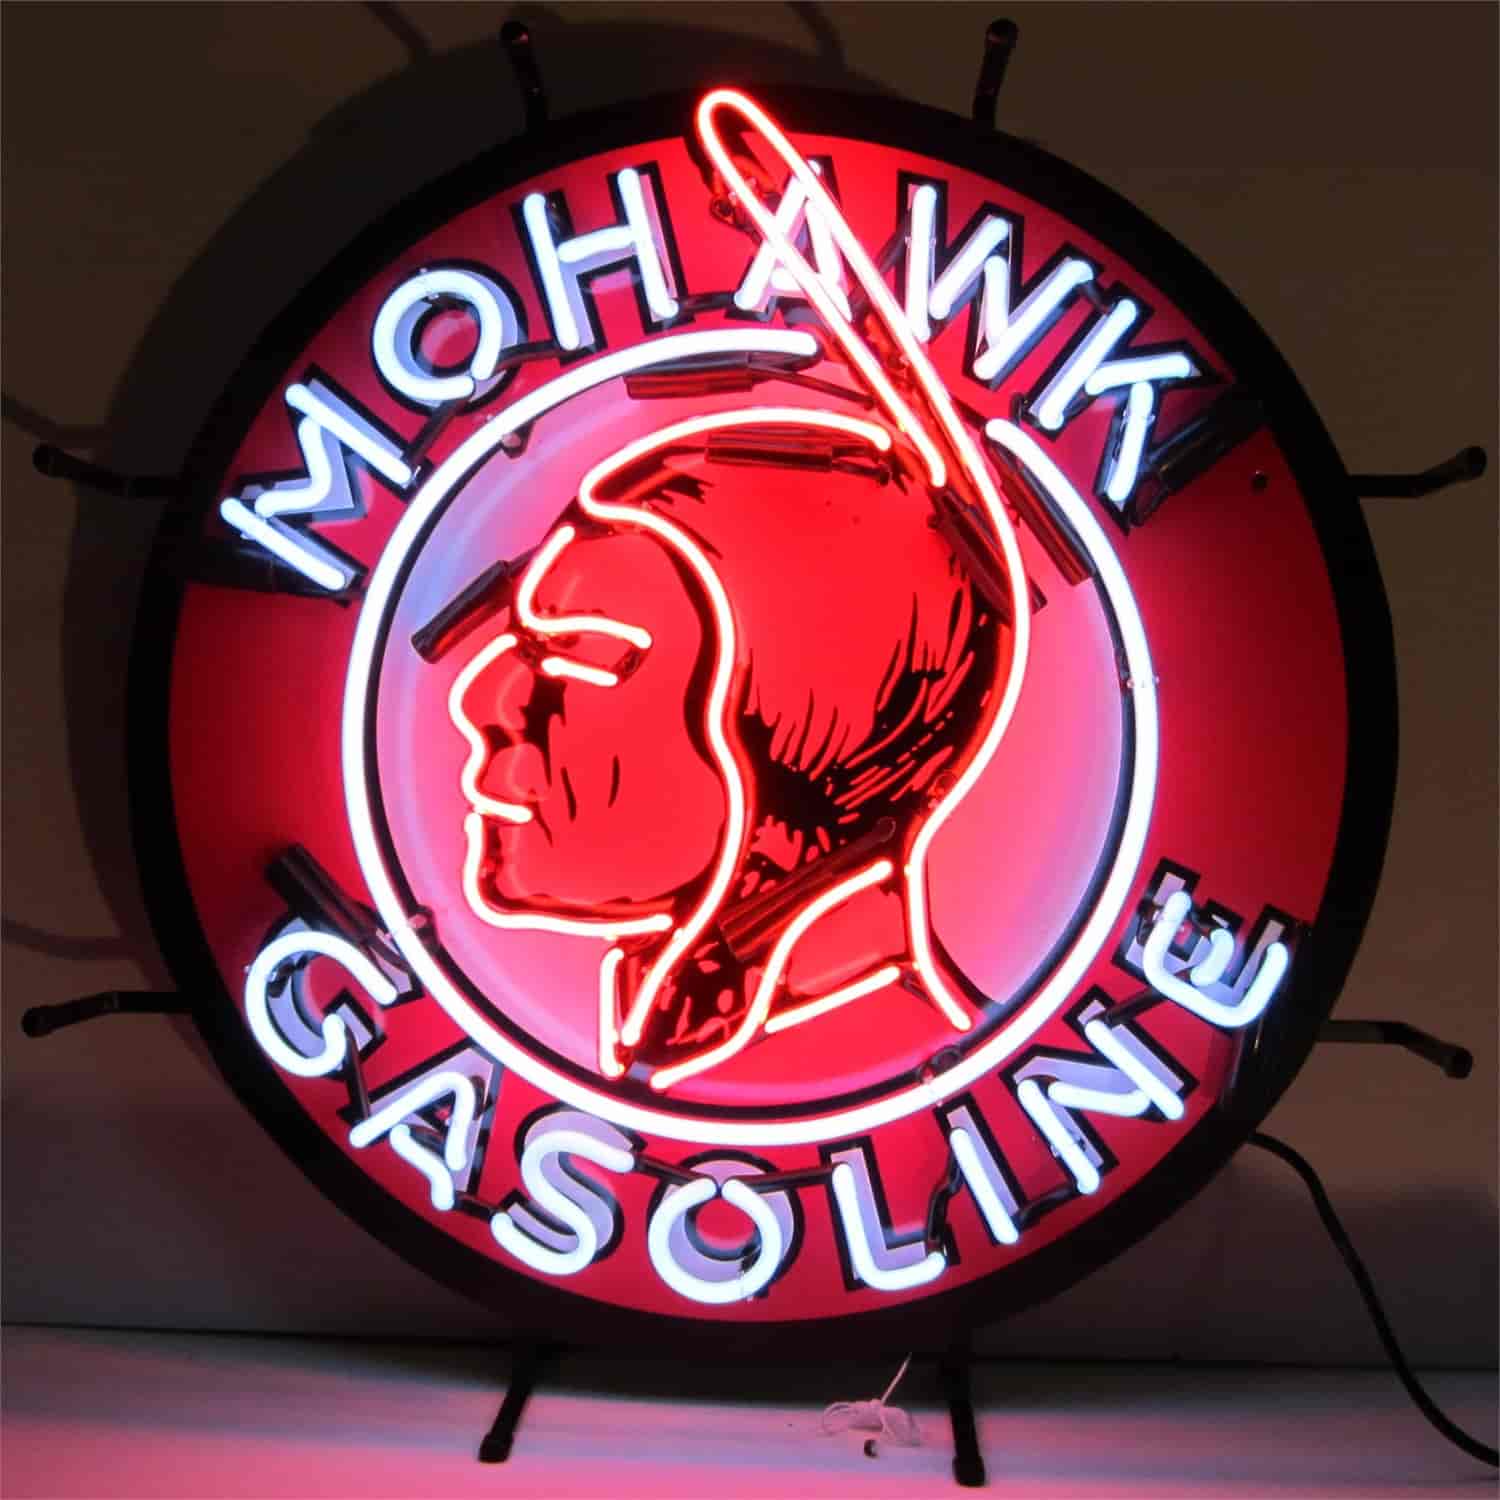 Mohawk Gasoline Neon Sign